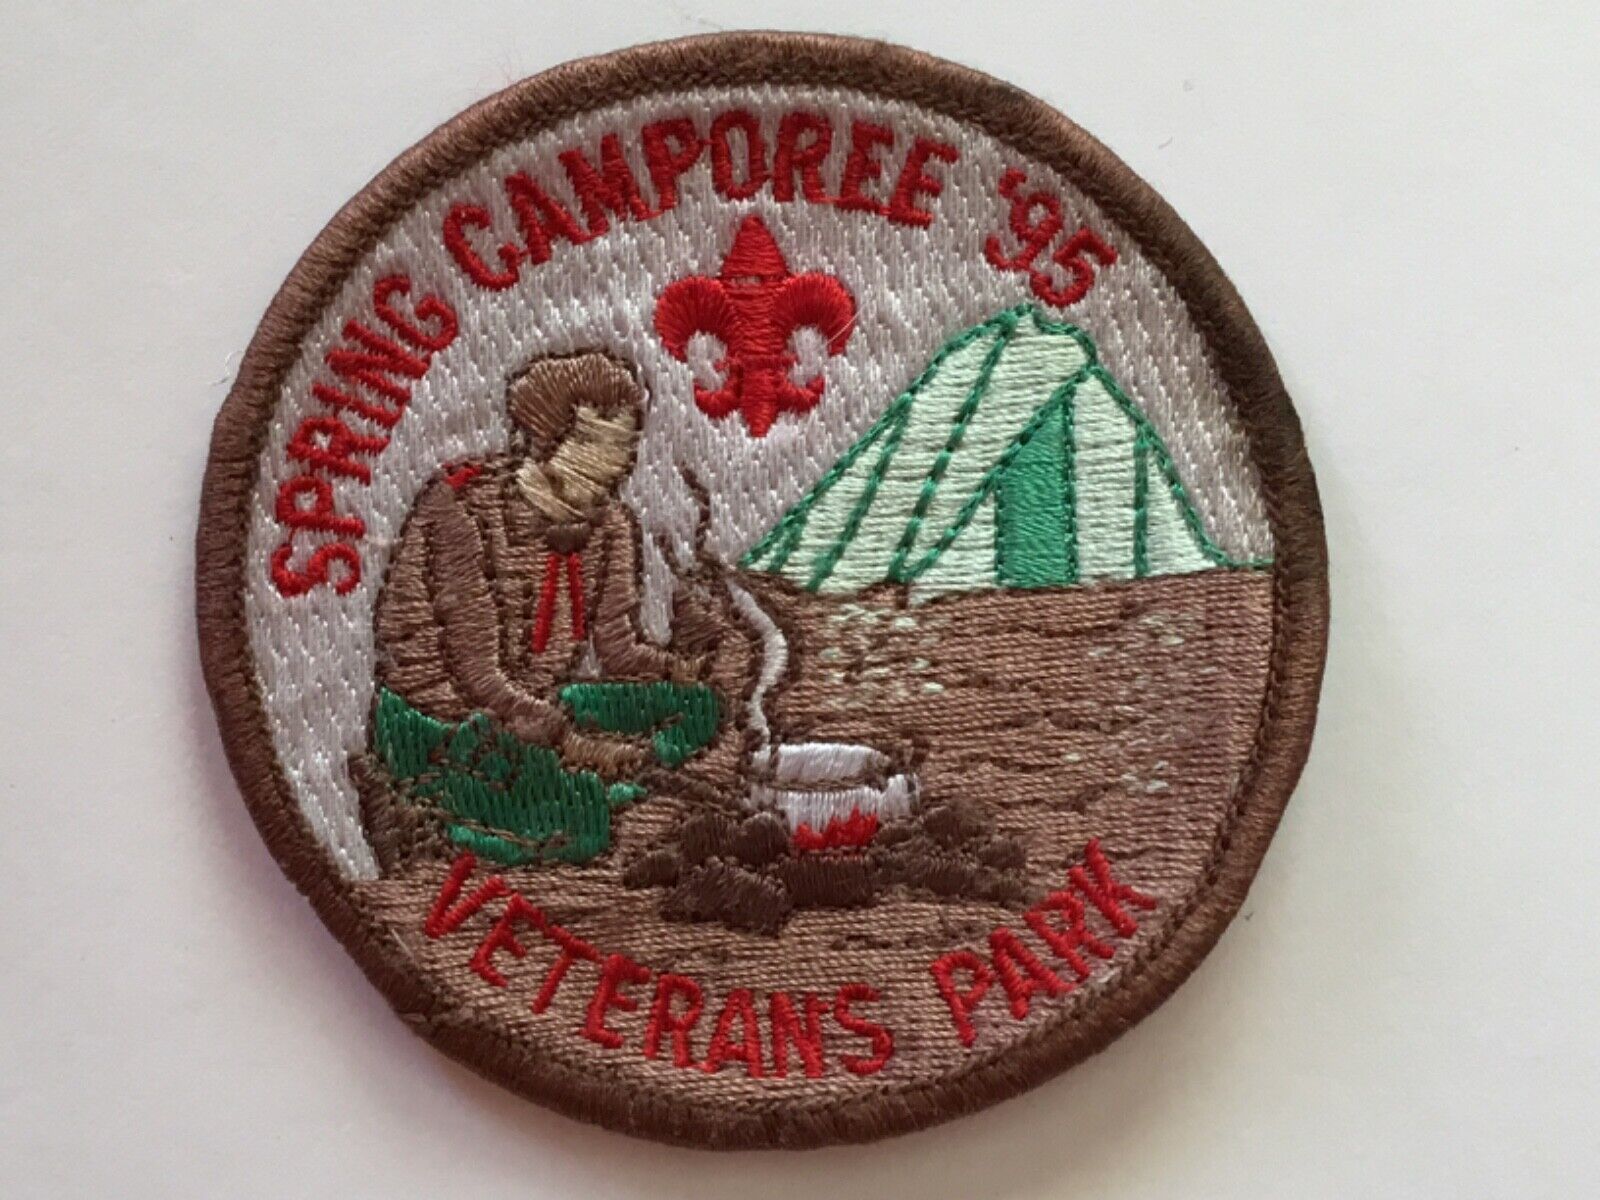 Please Help Identify - 1995 Veterans Park Spring Camporee patch